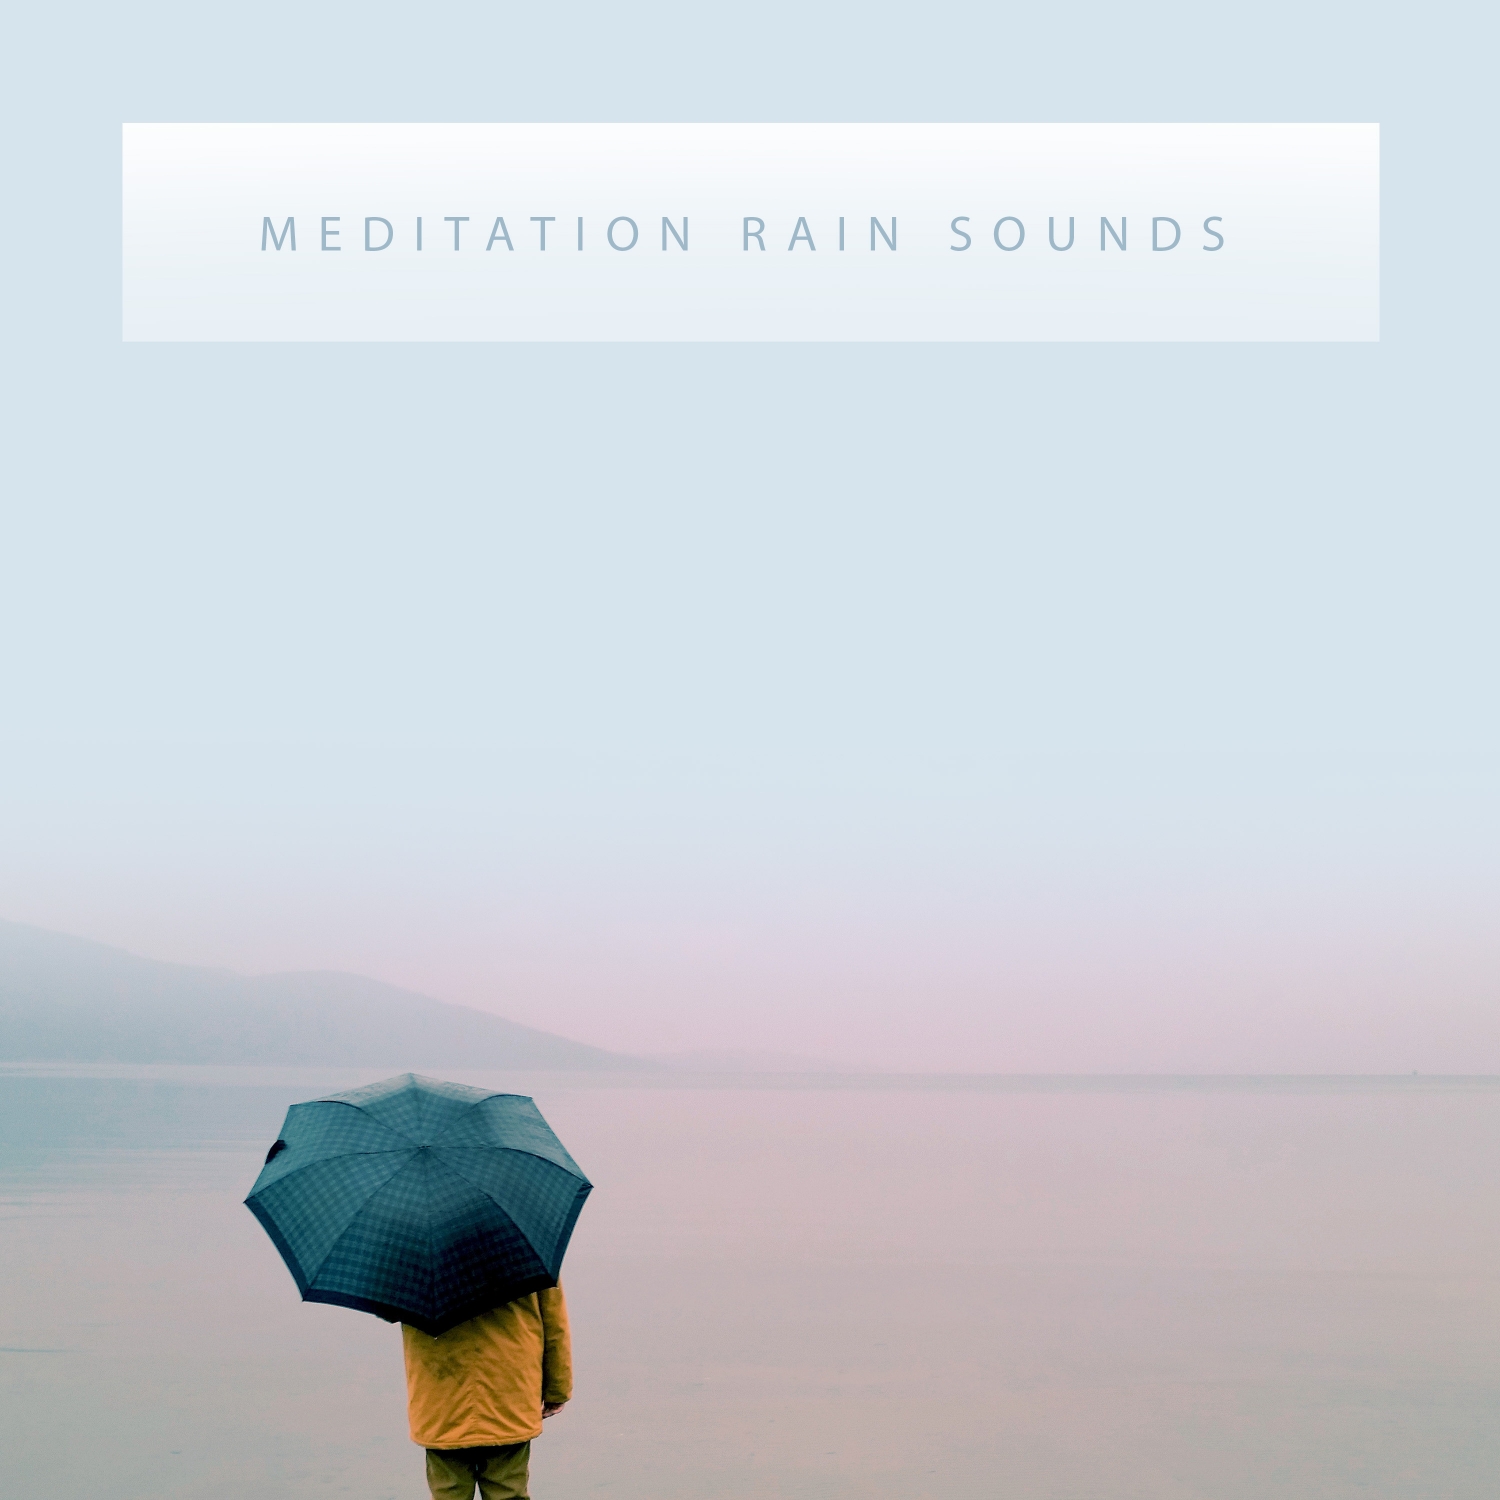 15 Meditation Rain Sounds, Perfect Relaxing Rainfall